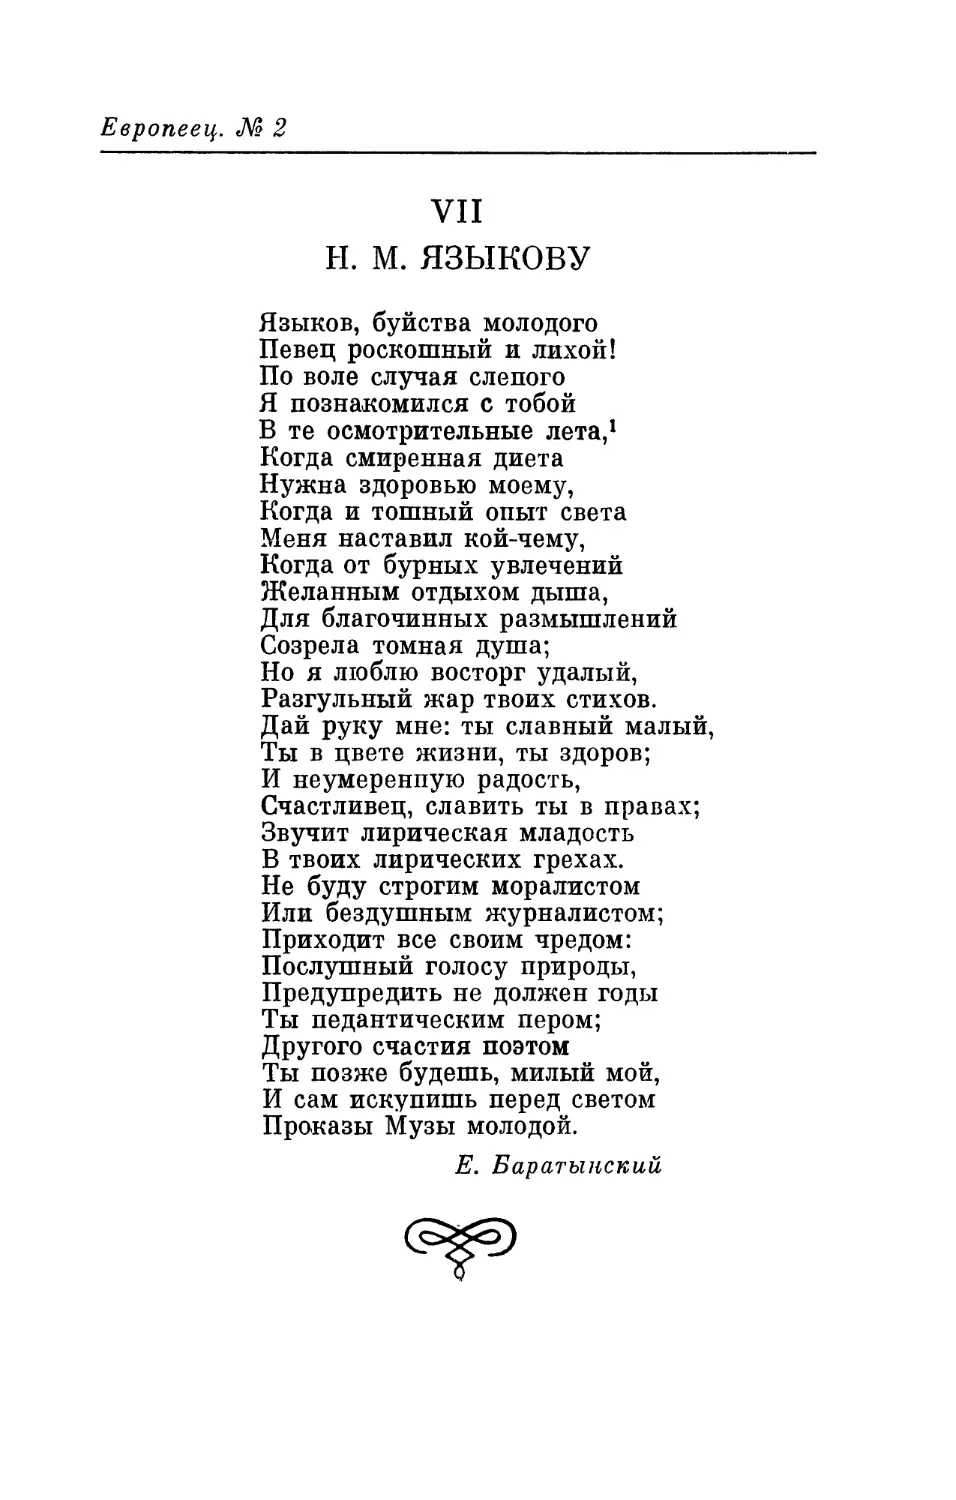 VII. Е. А. Баратынский. H. М. Языкову